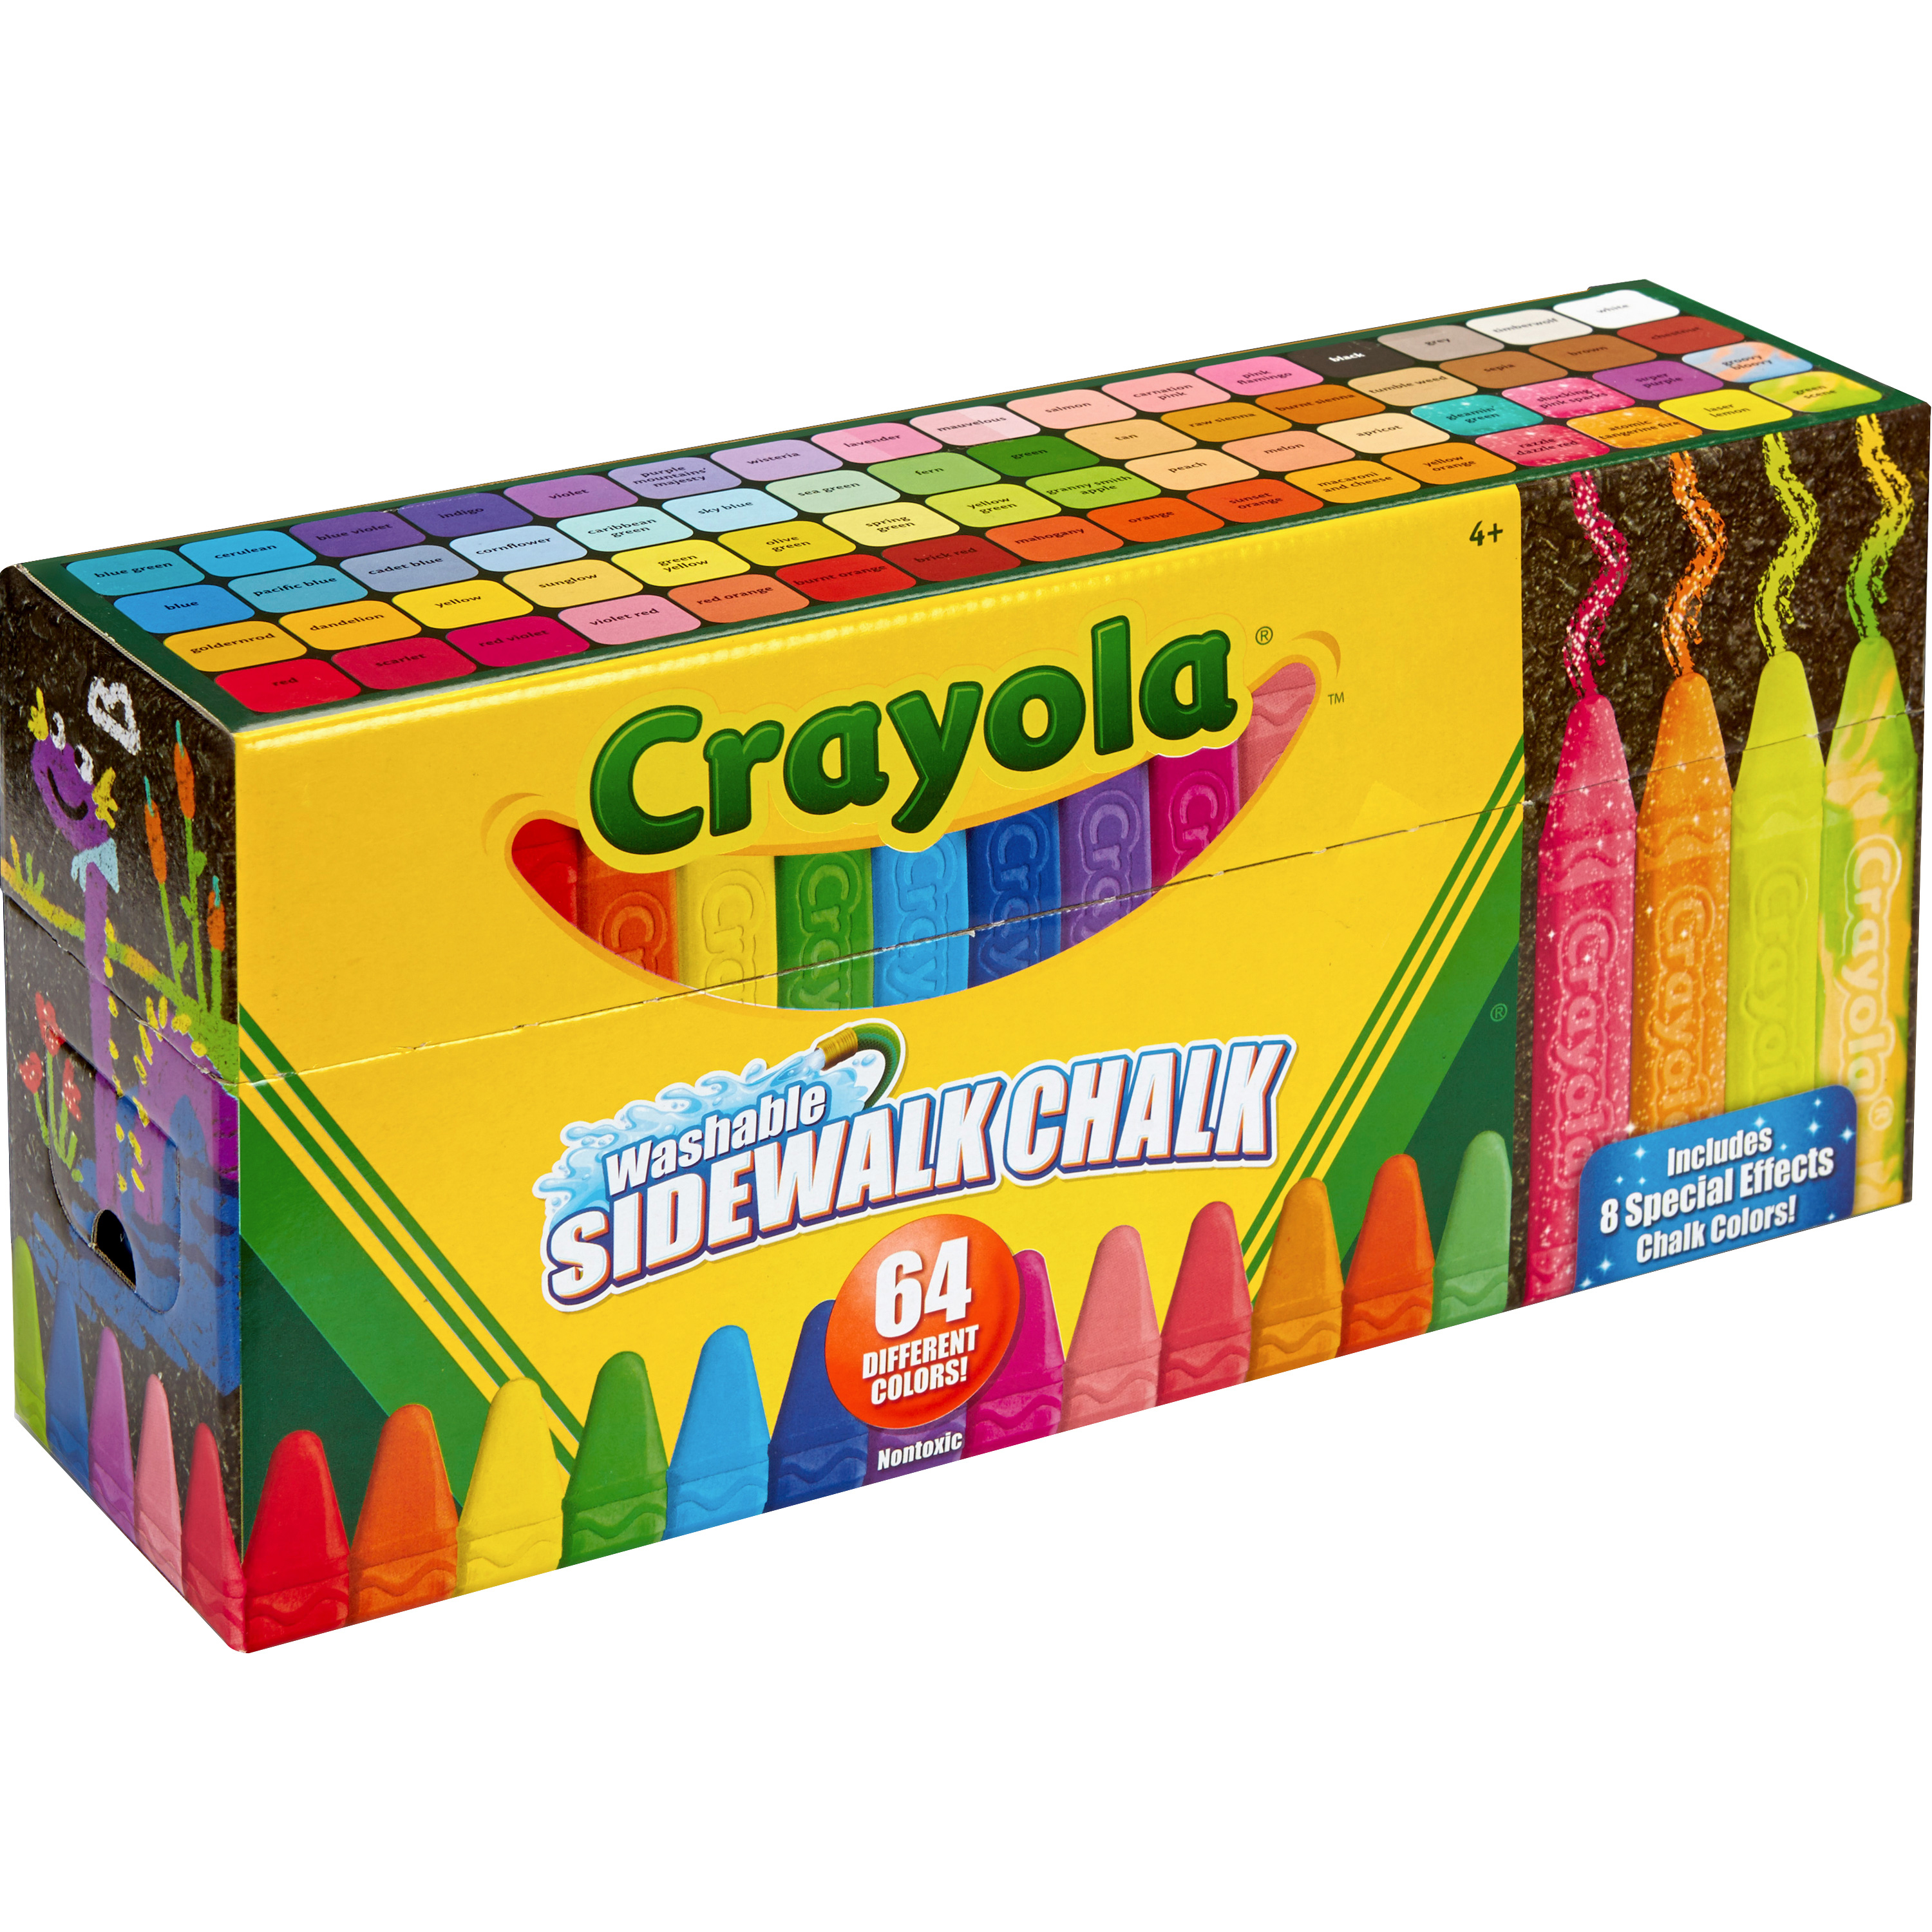 Crayola LLC 1 Chalk Box, 12 Chalk Sticks Chalk Or Chalk Holder